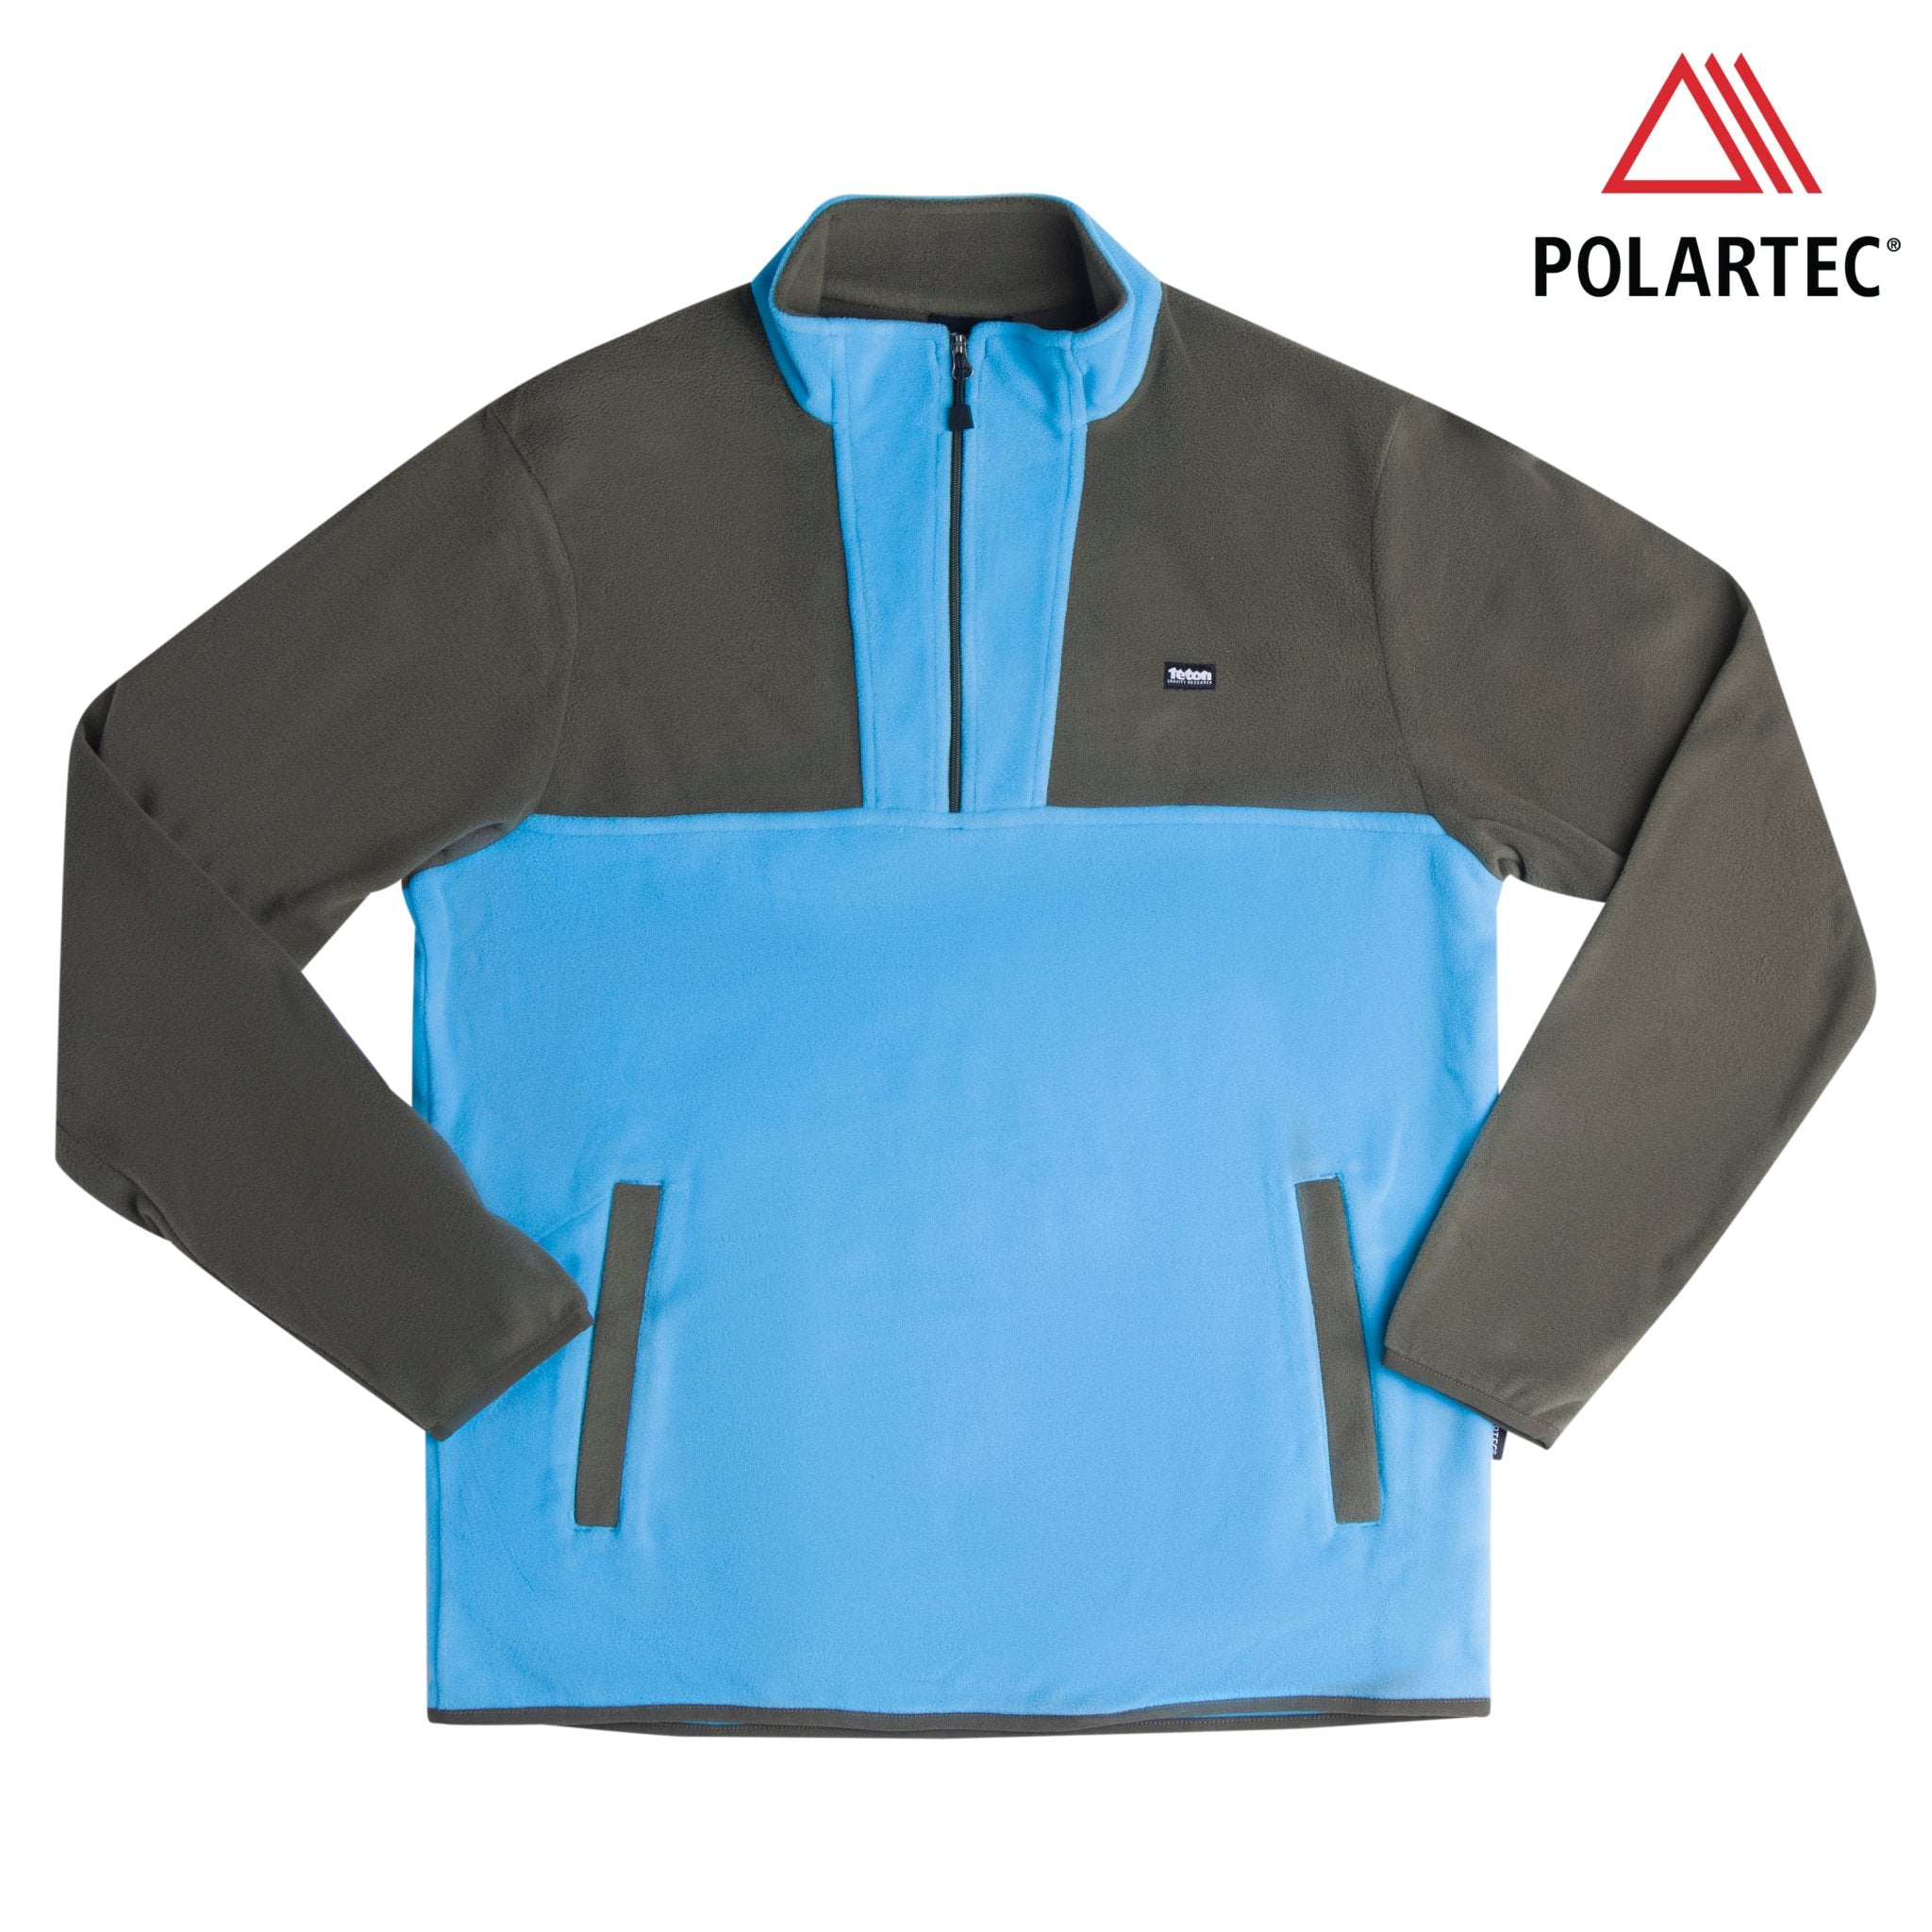 M-Tac Nord Polartec 200 Fleece Jacket for Men - Military Style